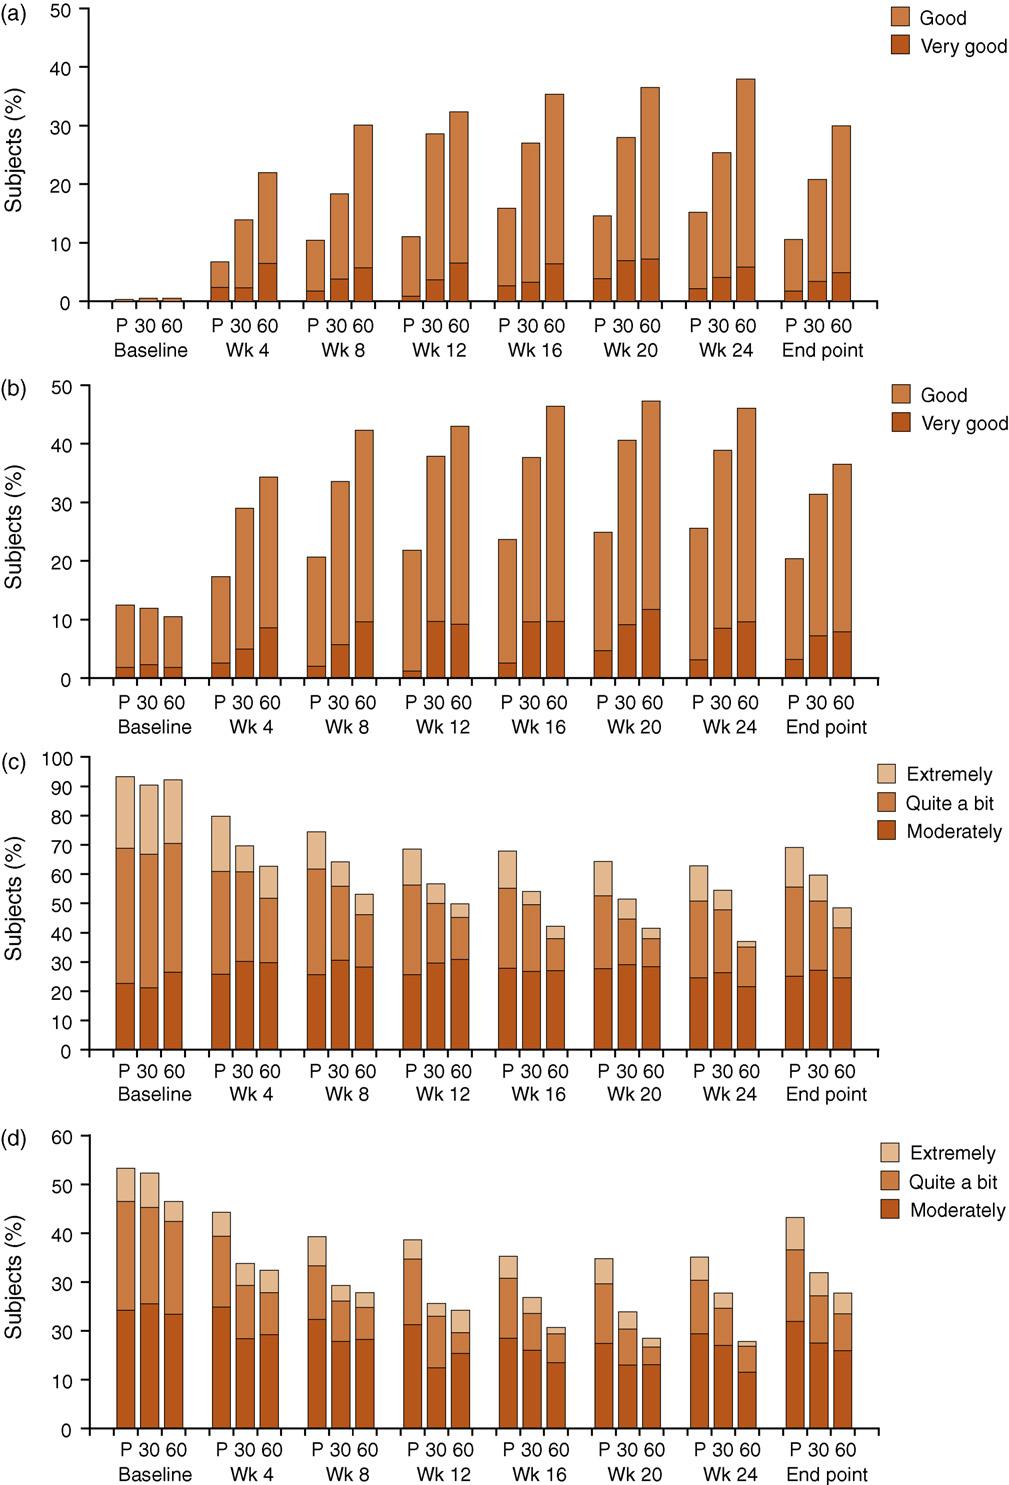 964 european urology 55 (2009) 957 968 Fig. 3 Premature Ejaculation Profile results over time.